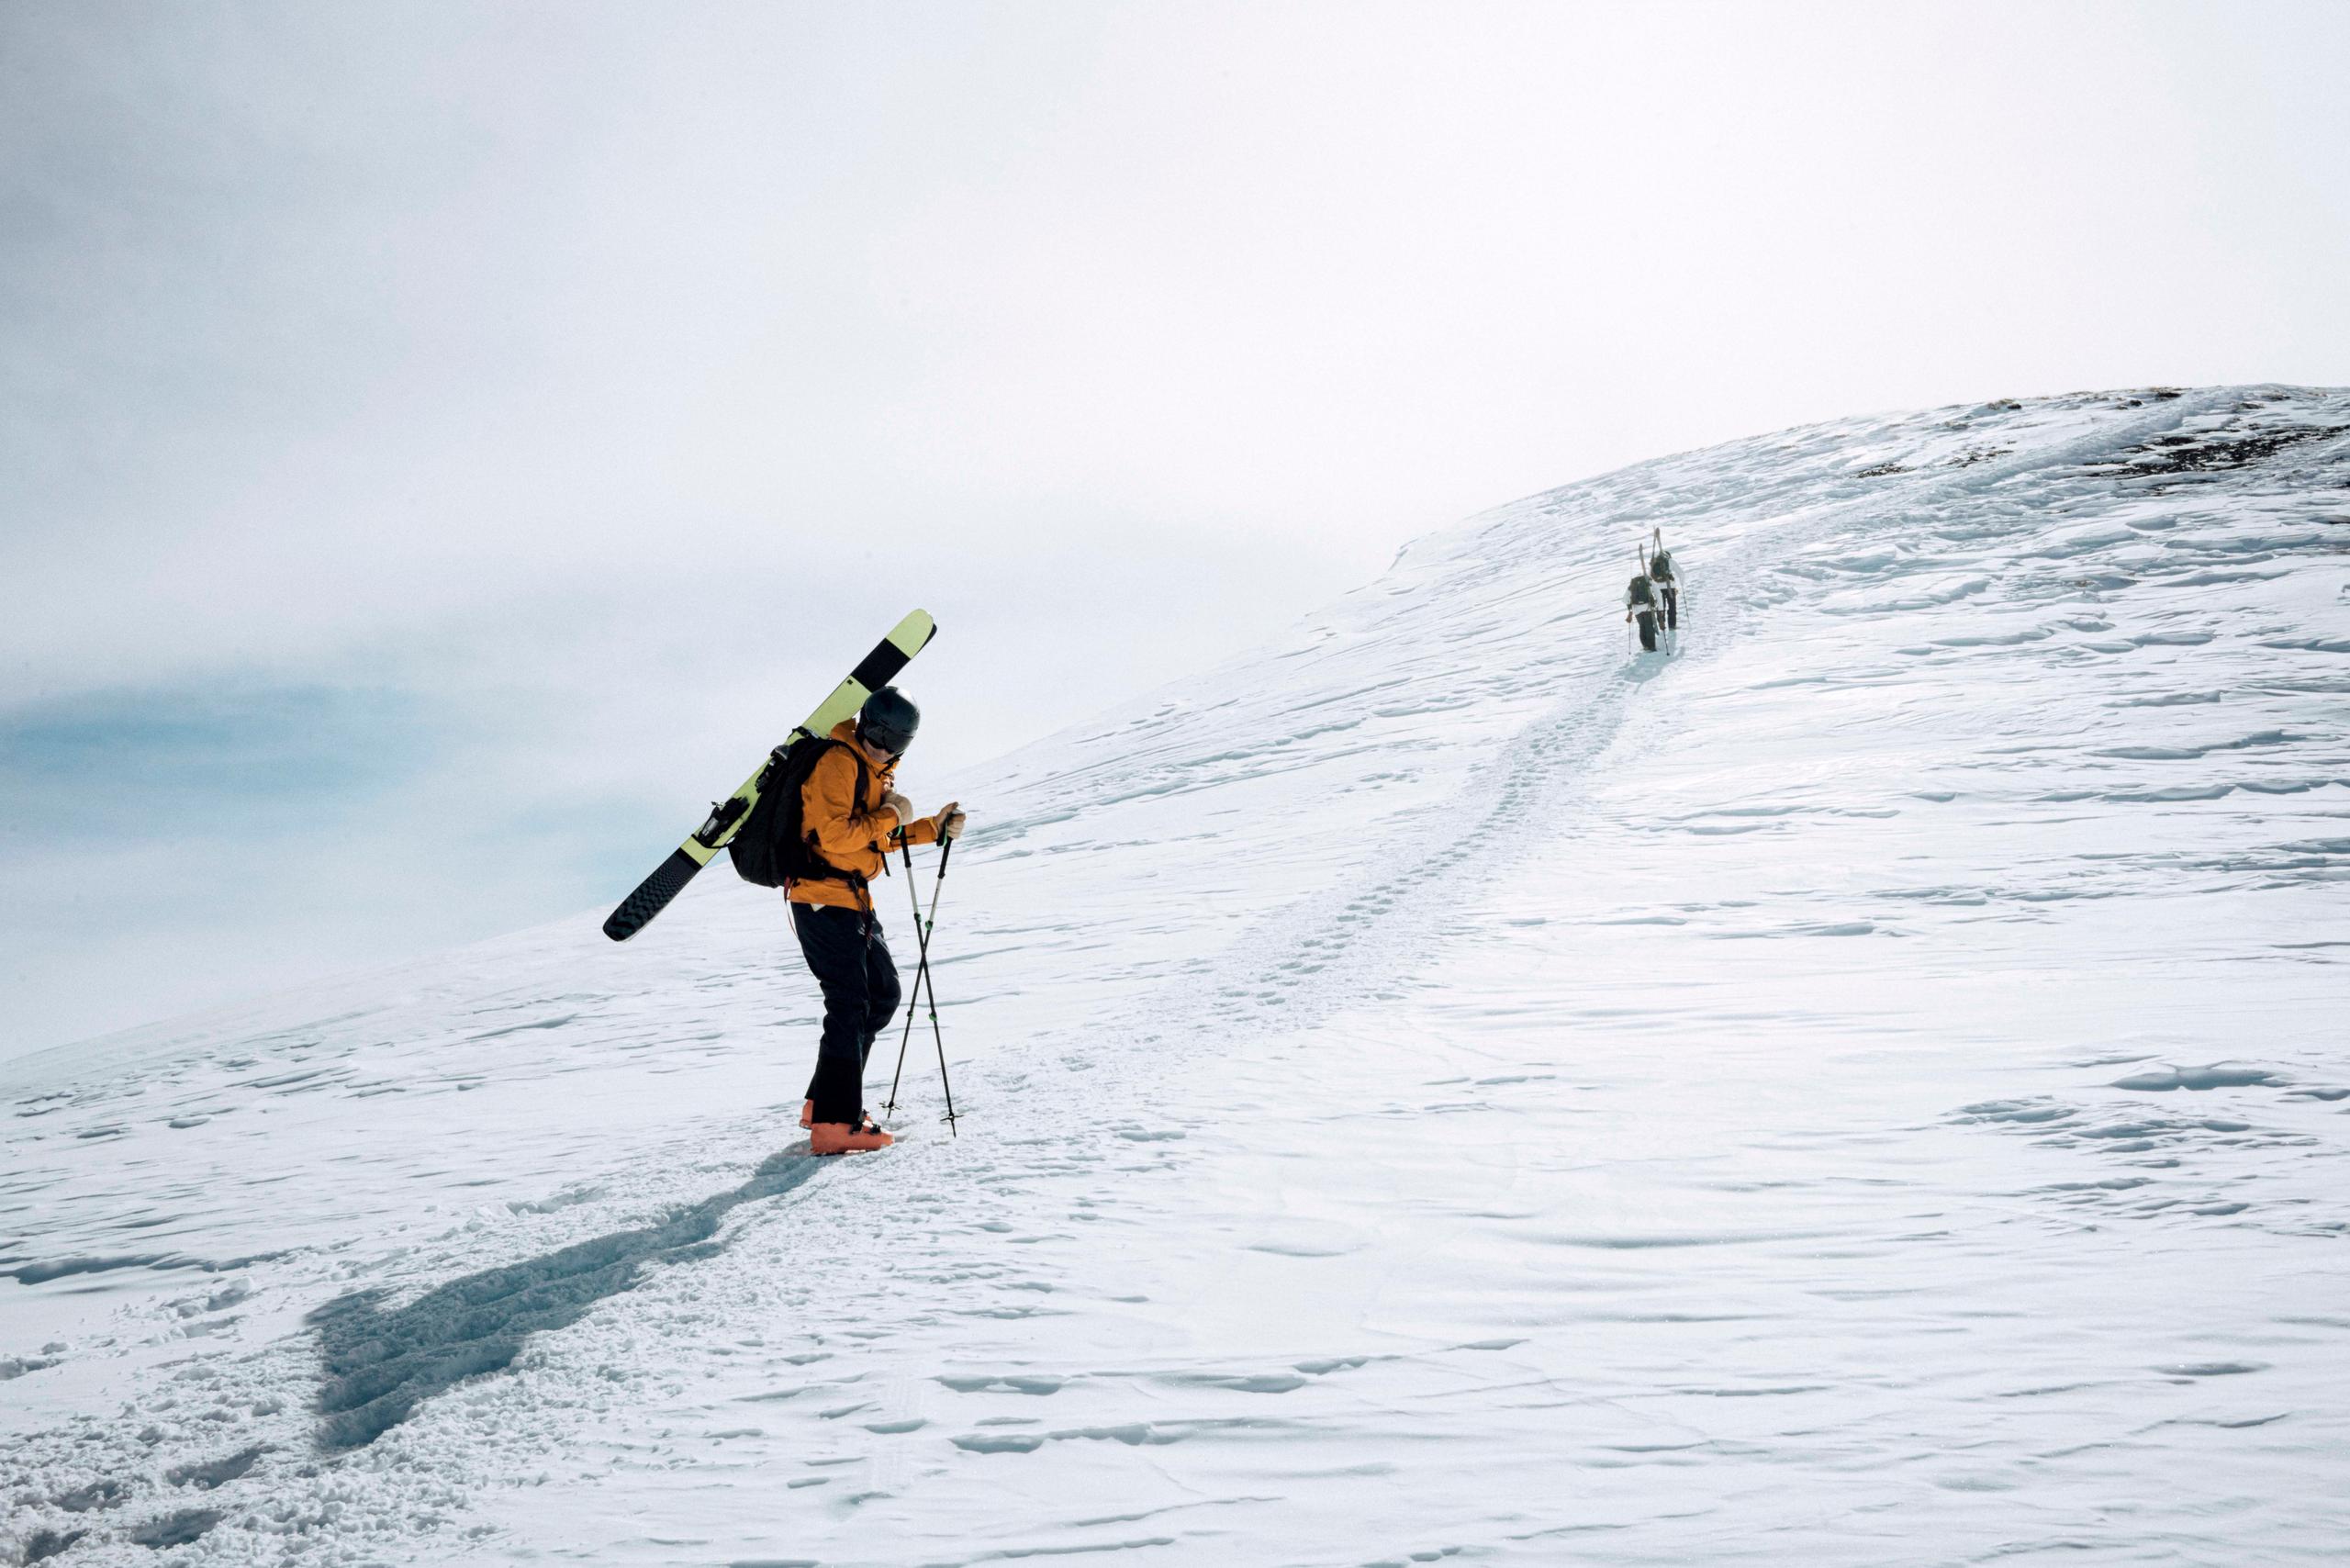 Skiiers hiking up mountain in Silverton, Colorado